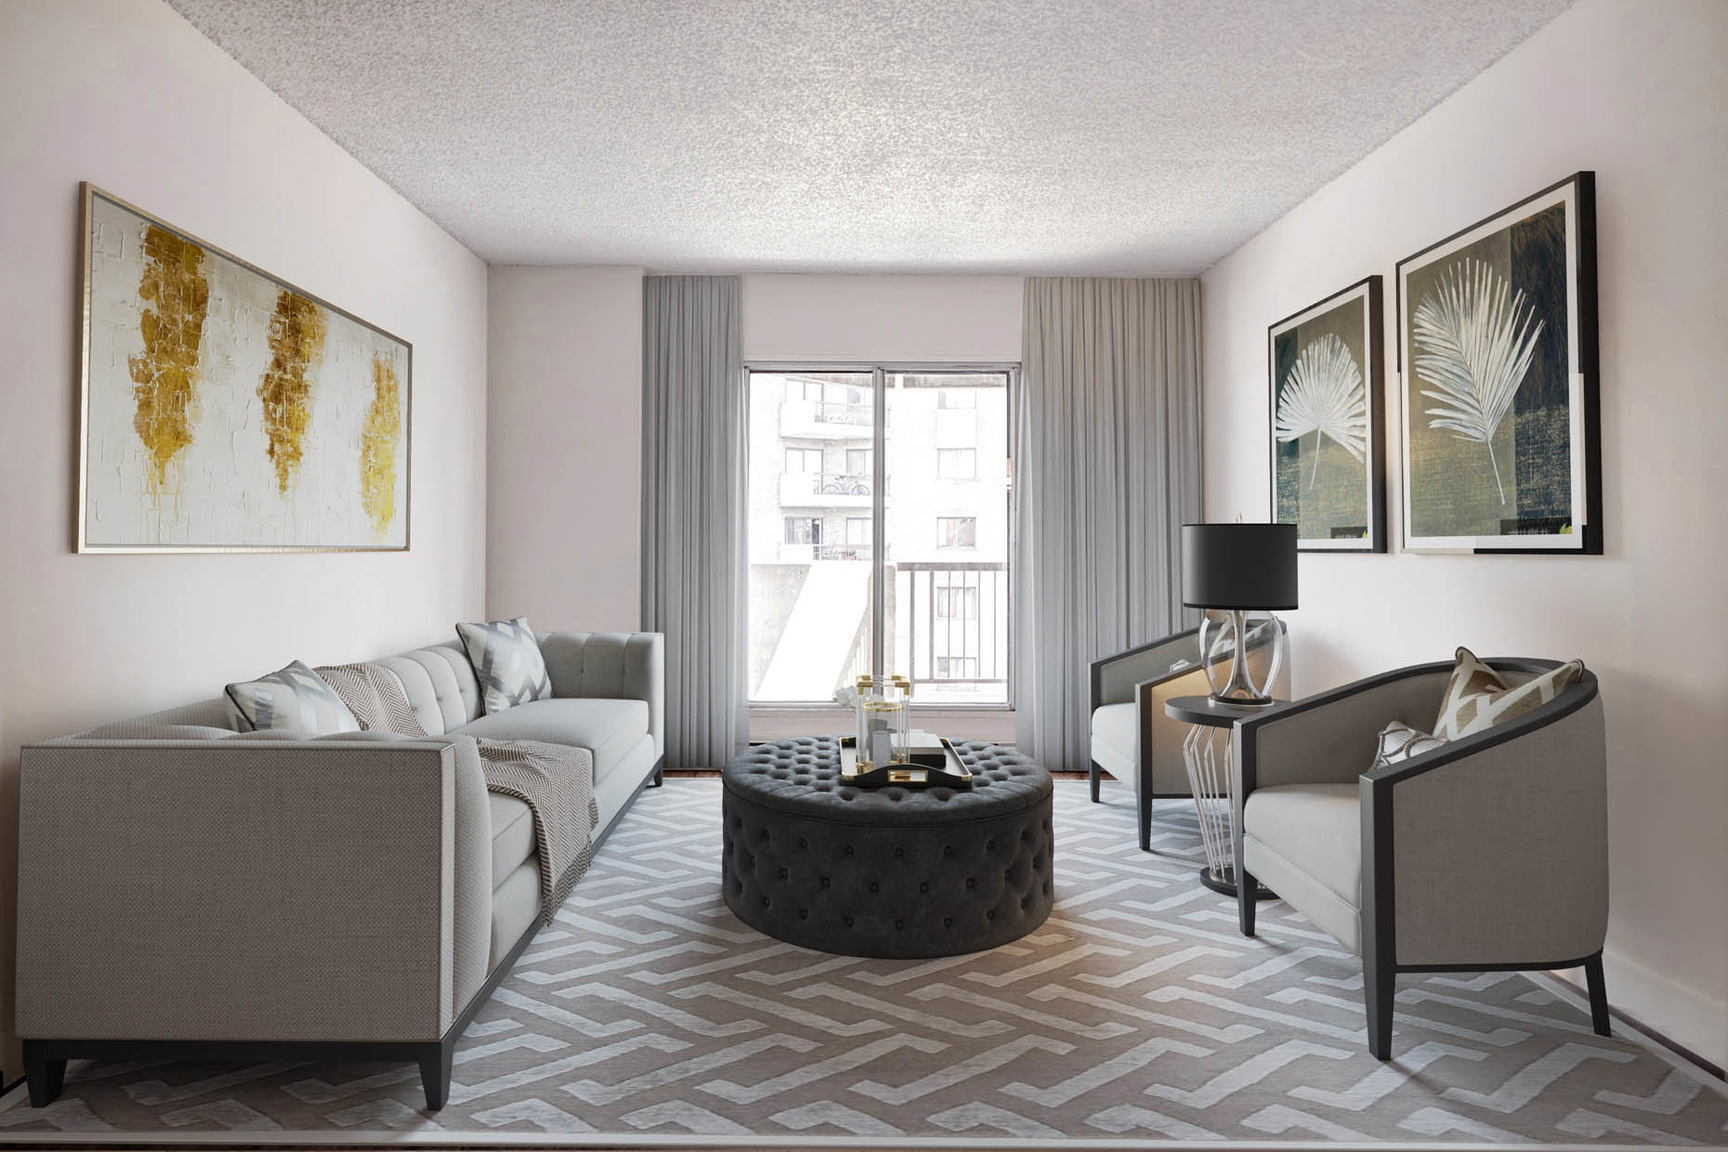 1 bedroom Apartments for rent in Ville St-Laurent - Bois-Franc at Complexe Deguire - Photo 02 - RentQuebecApartments – L407181